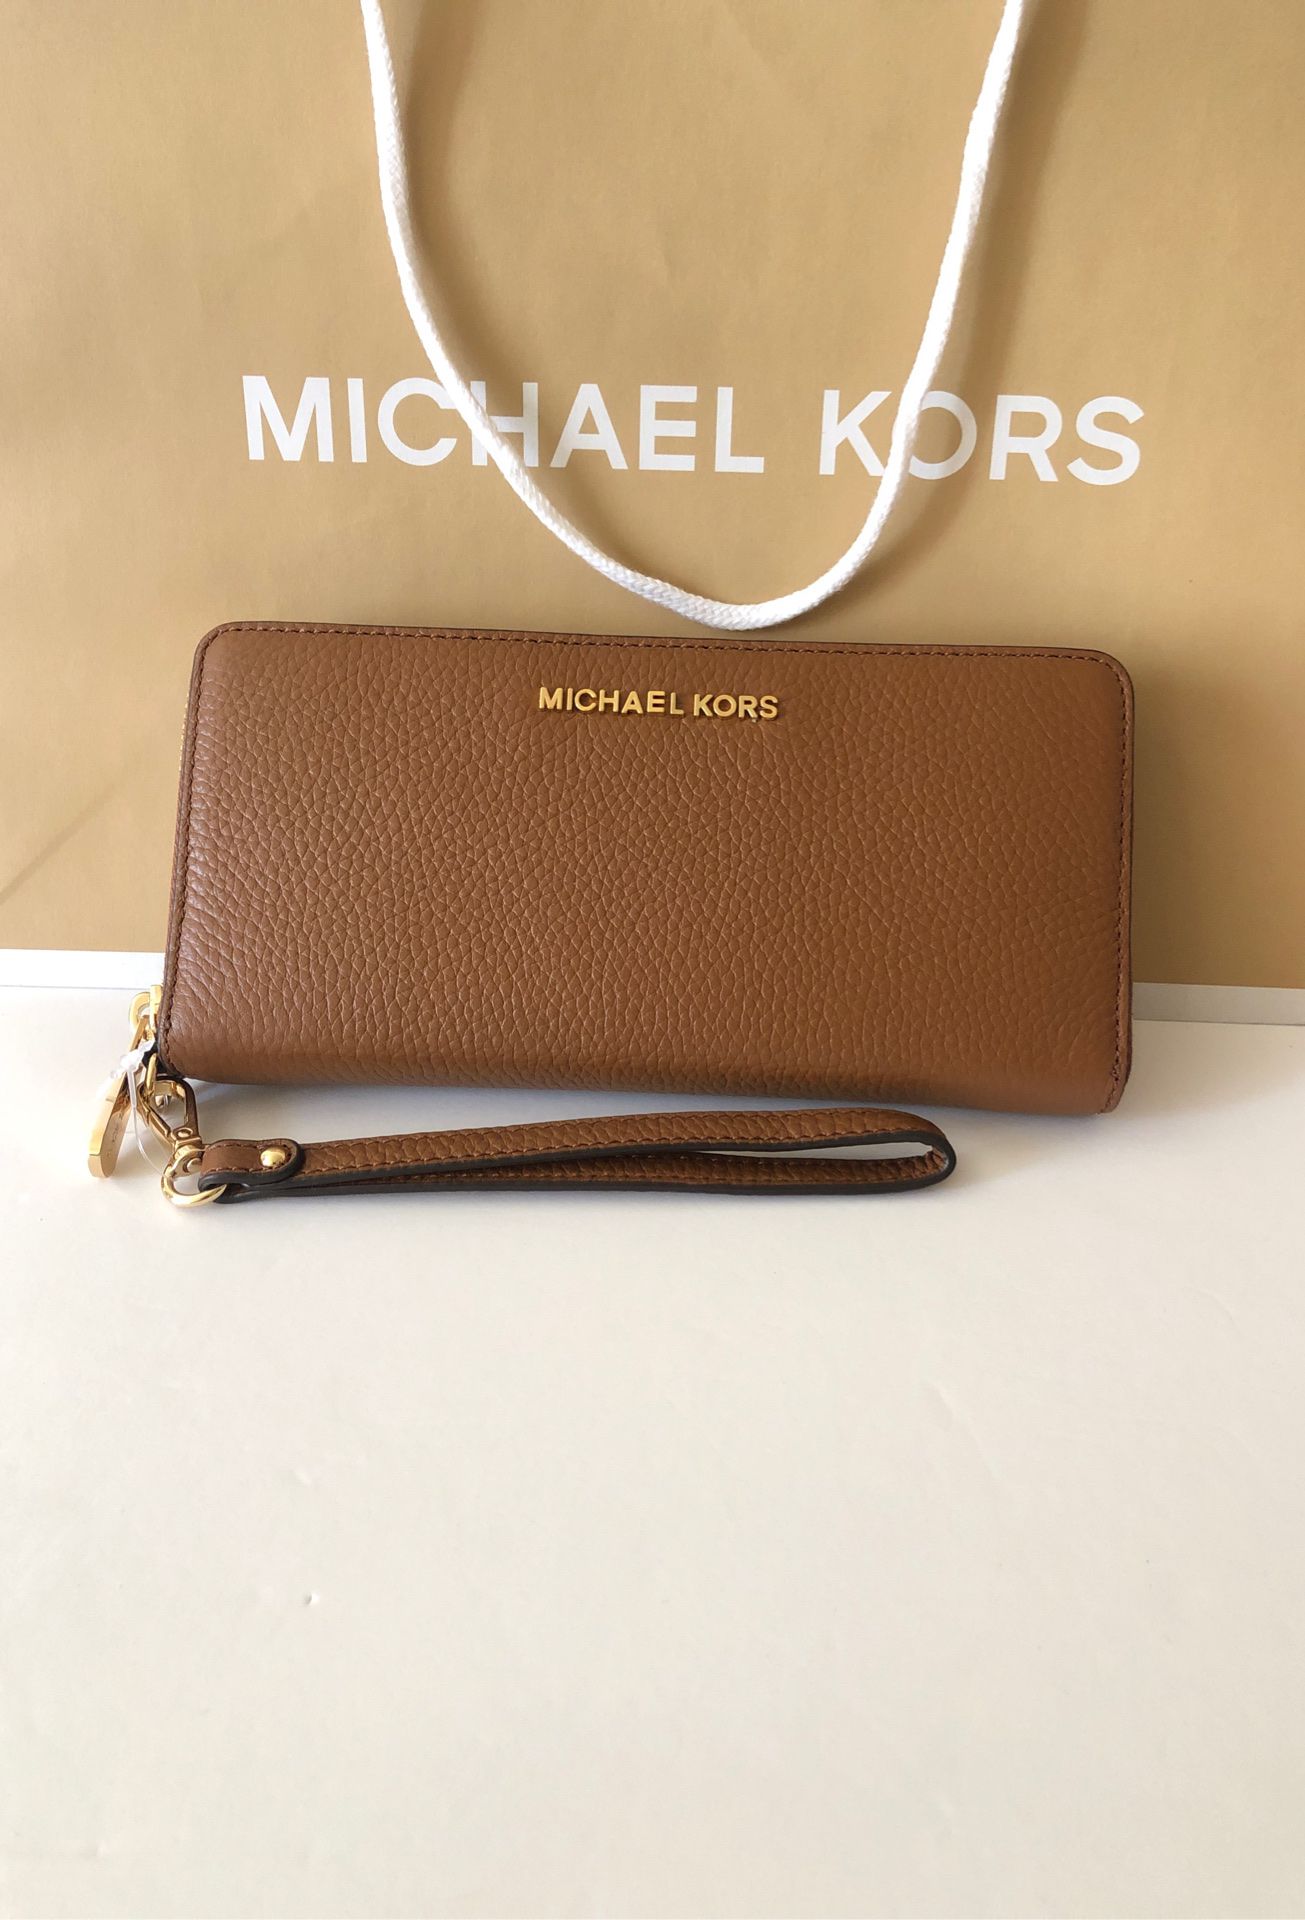 MICHAEL KORS. Wallet $130 Brand New